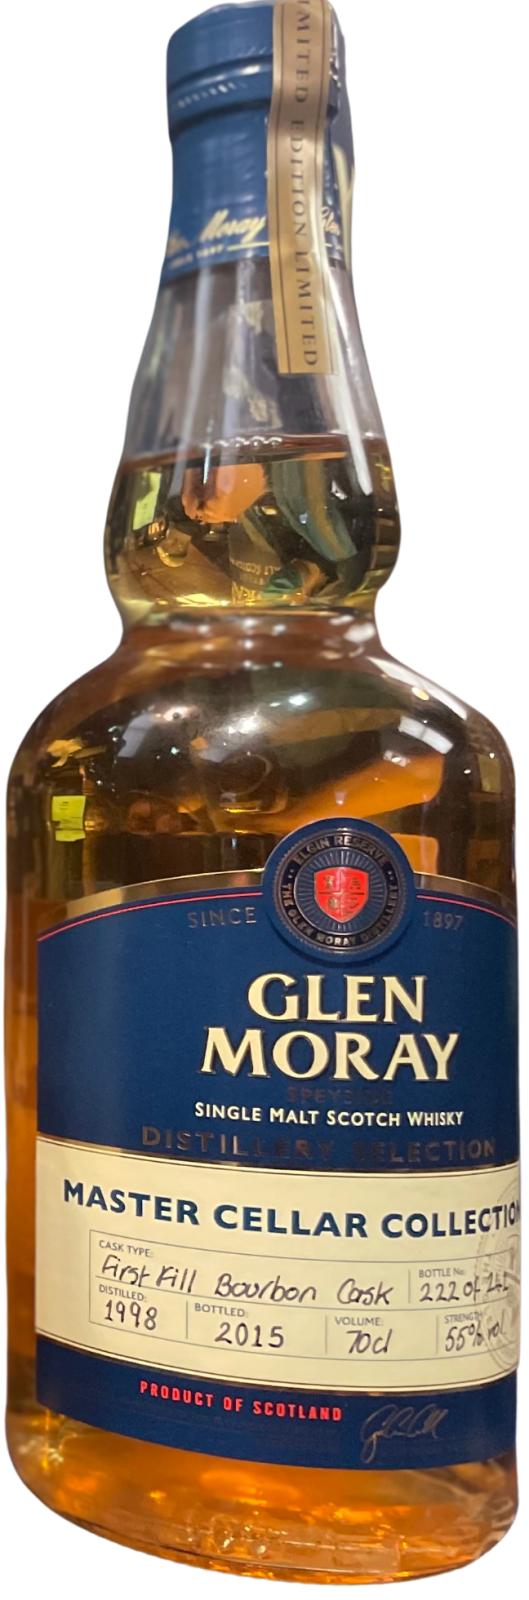 Glen Moray 1998 Master Cellar Collection 1st Fill Bourbon 55% 700ml